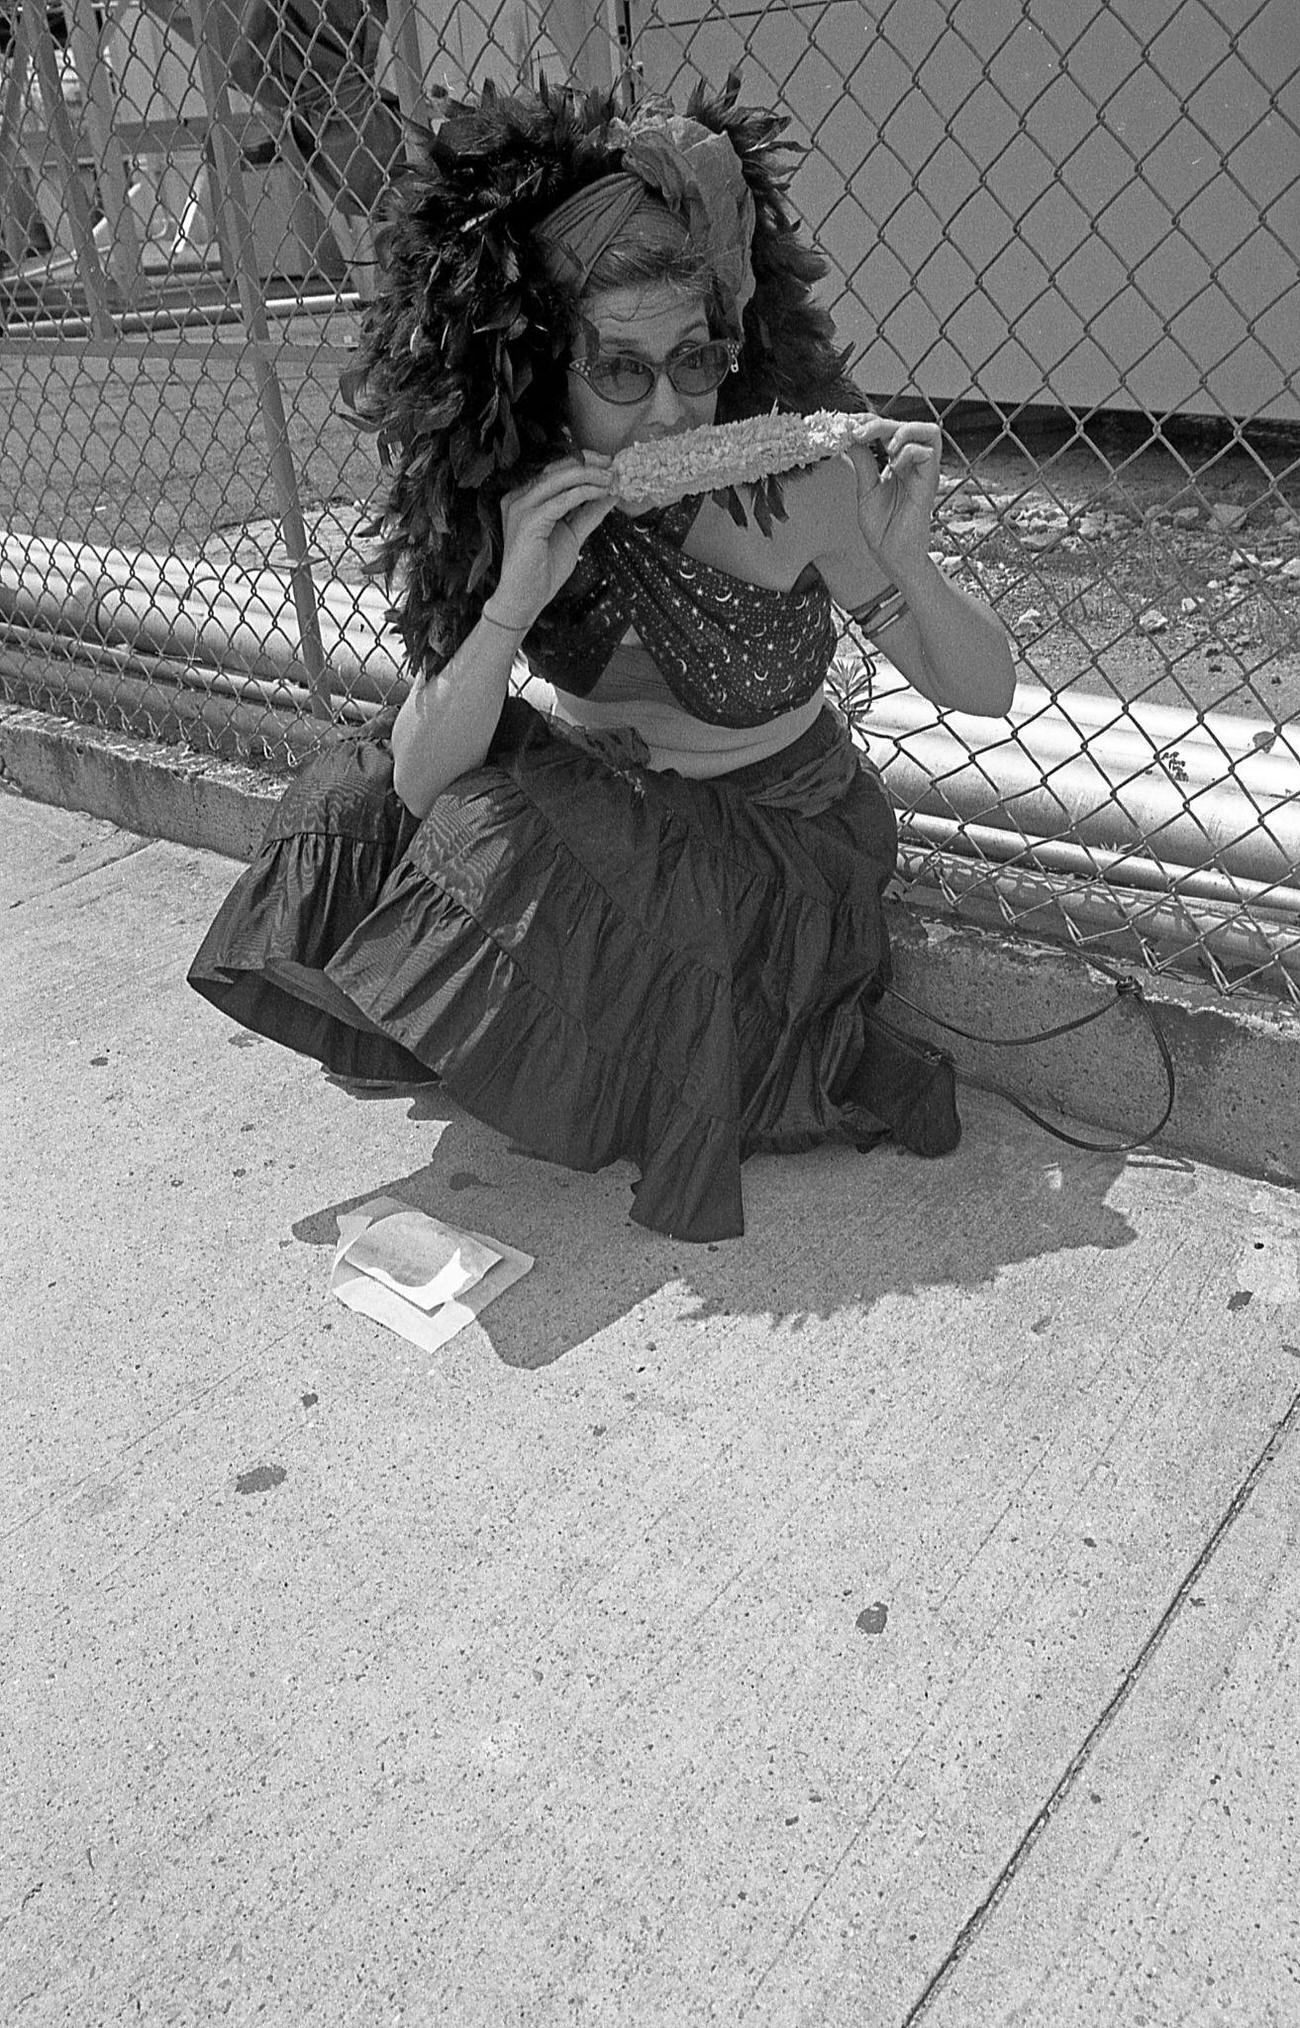 Woman Eats Corn On The Cob At Coney Island Mermaid Parade, 1997